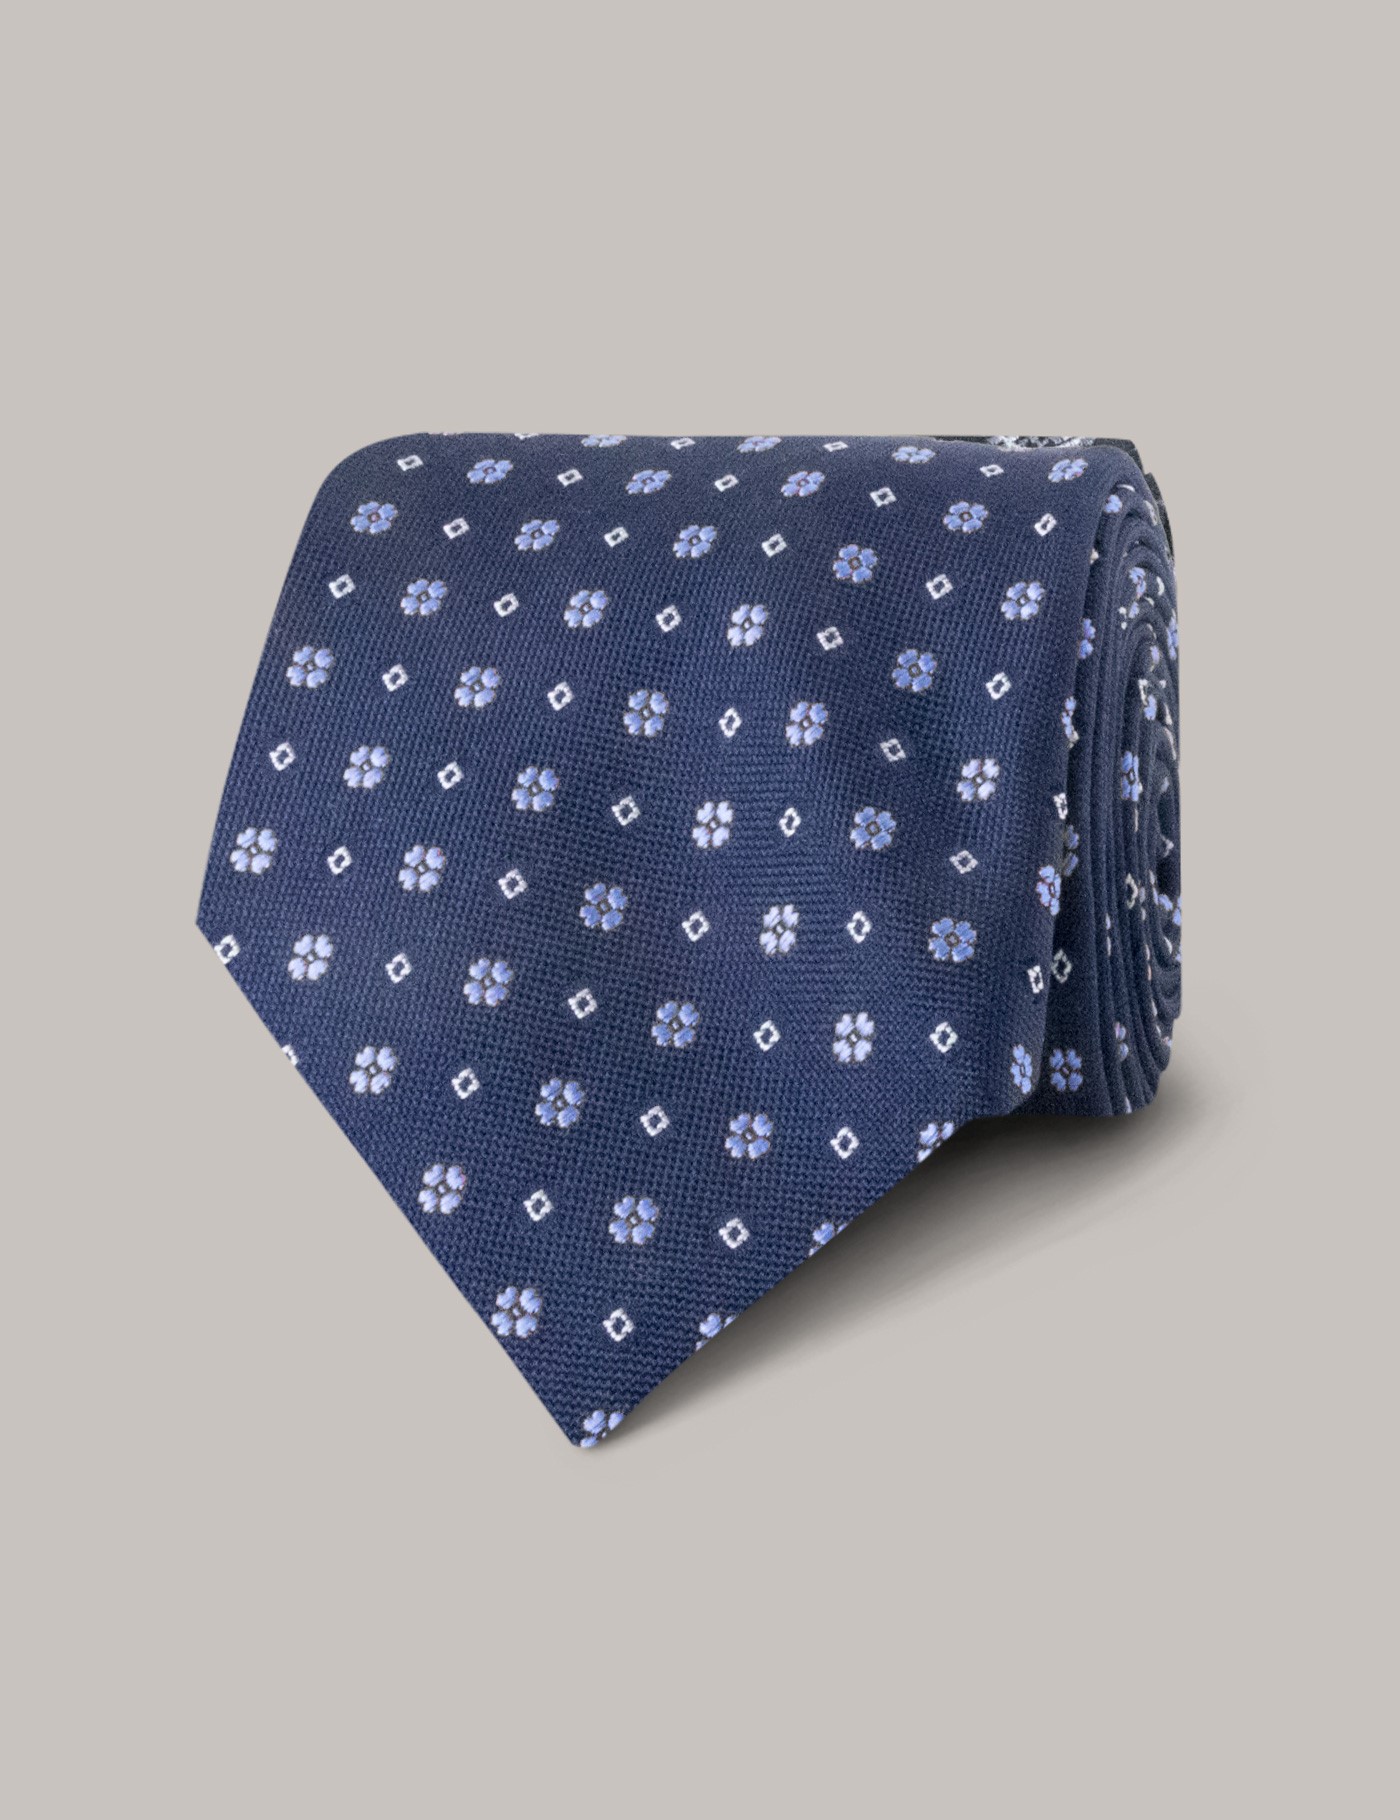 hawes & curtis navy & light blue floral squares tie - 100% silk